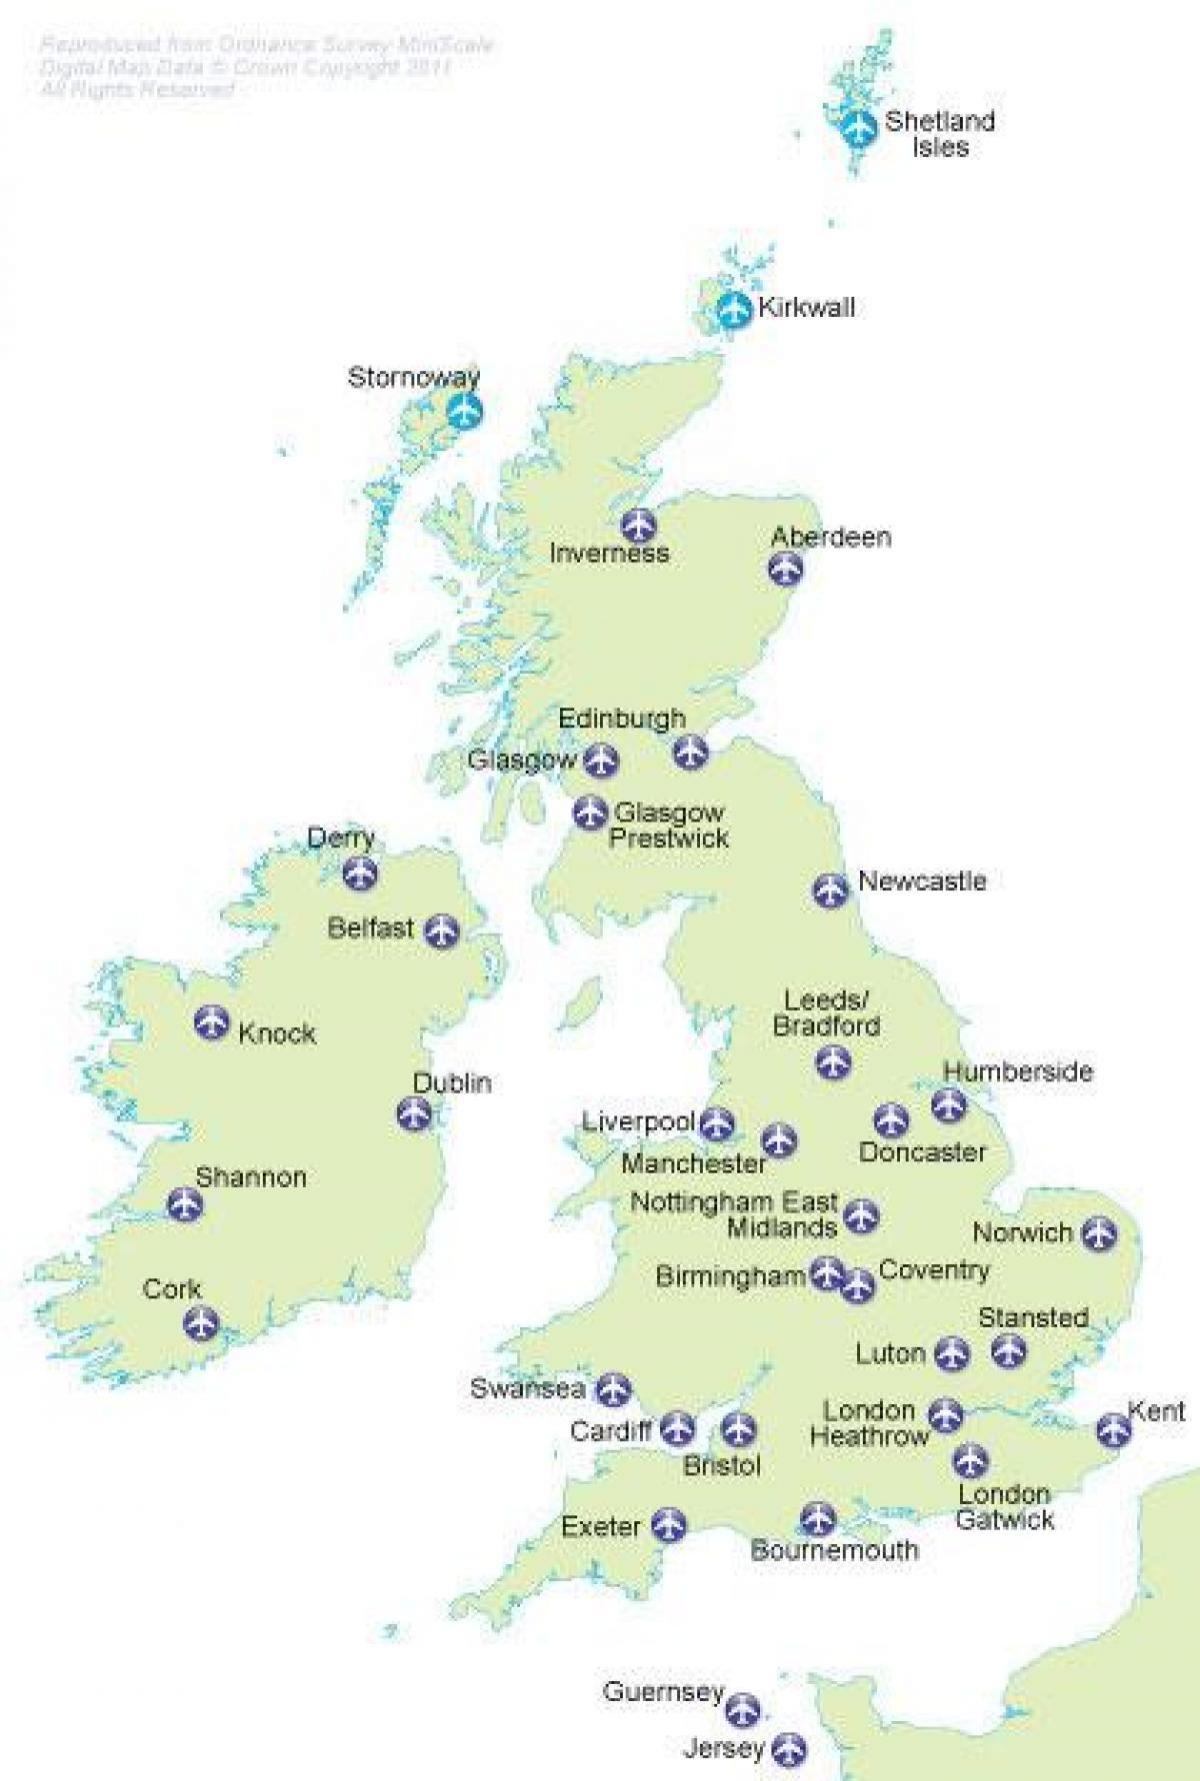 Map of United Kingdom (UK) airports